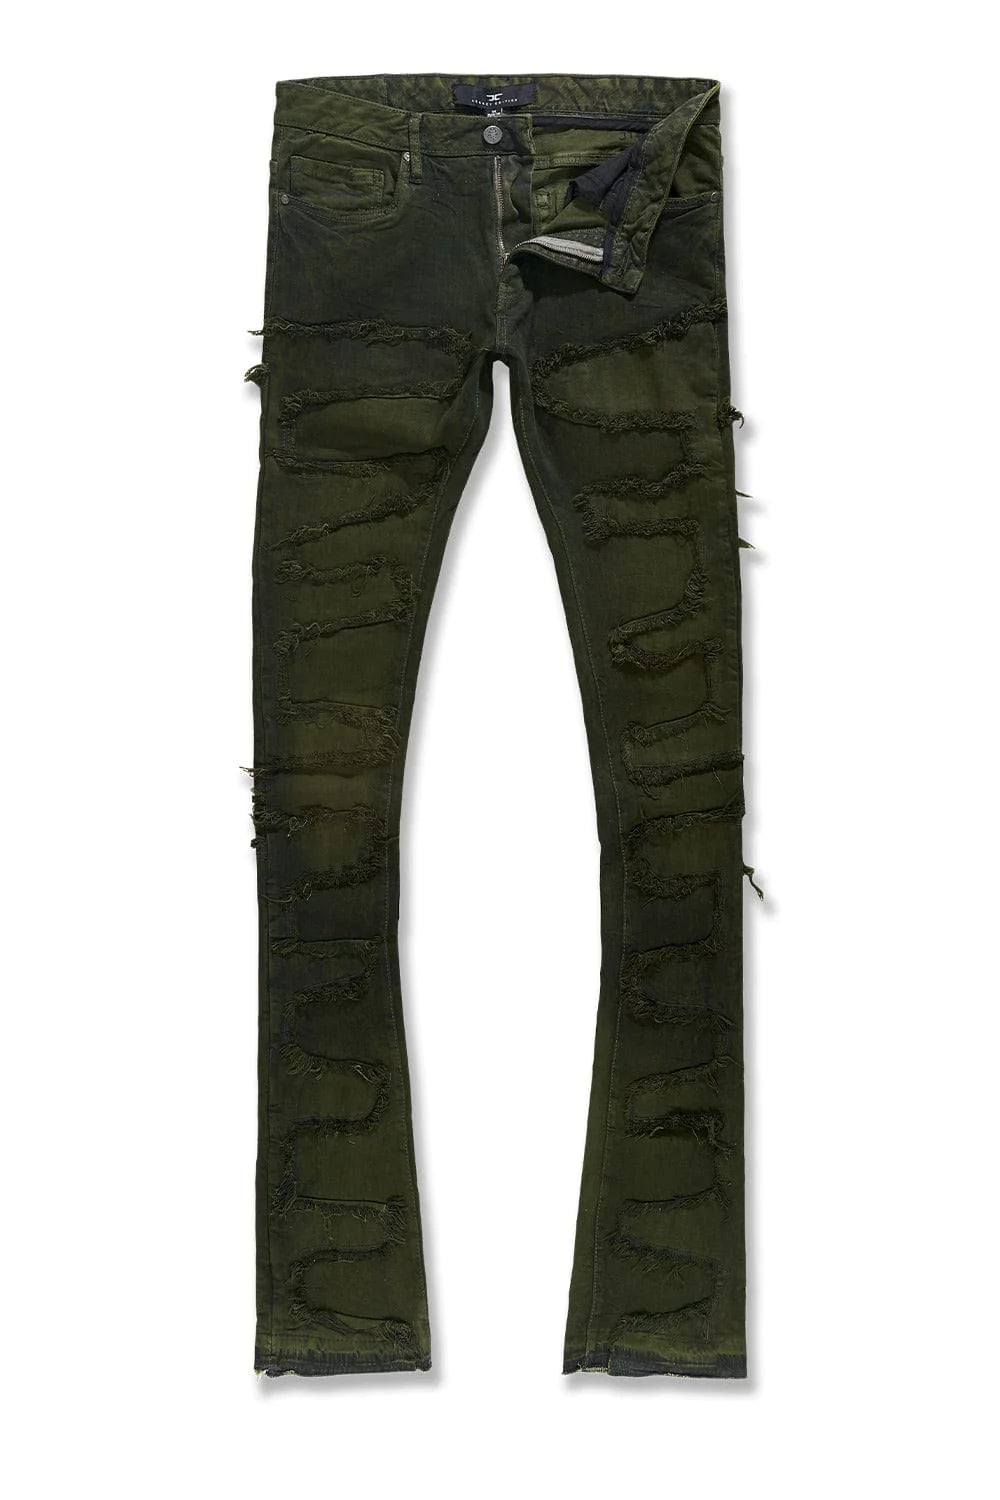 Martin Stacked - Oasis Denim Jeans - Olive